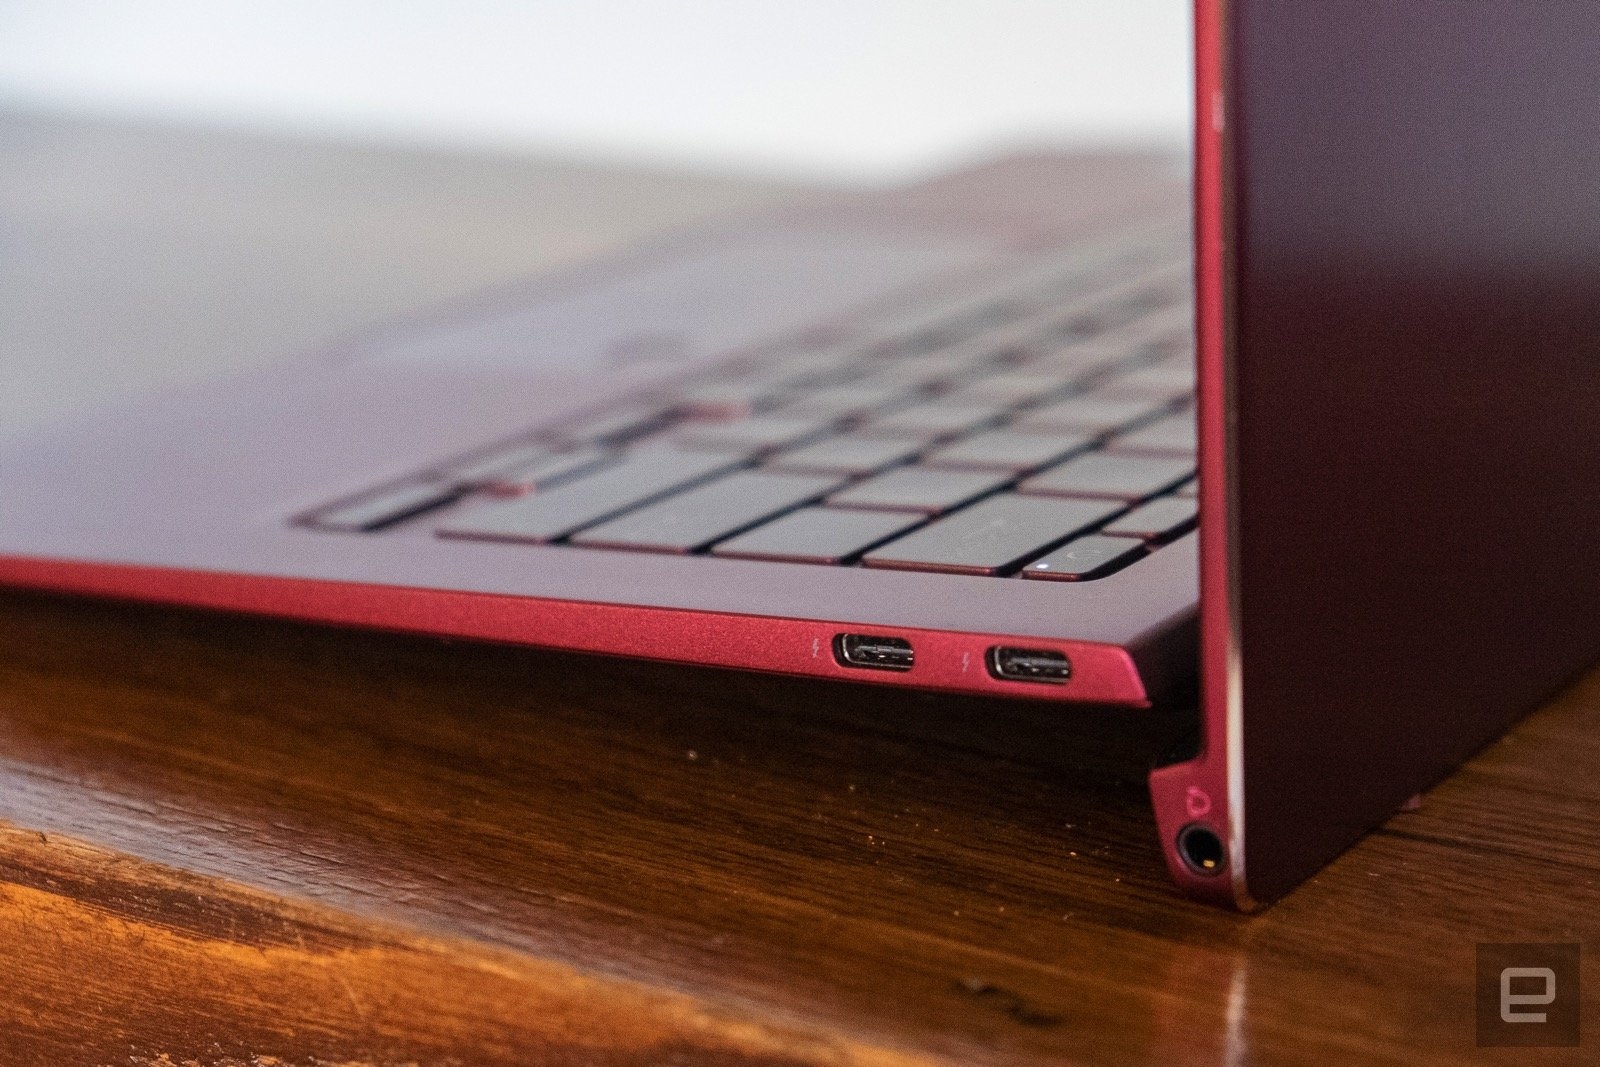 ASUS ZenBook S review: Just a decent laptop | DeviceDaily.com